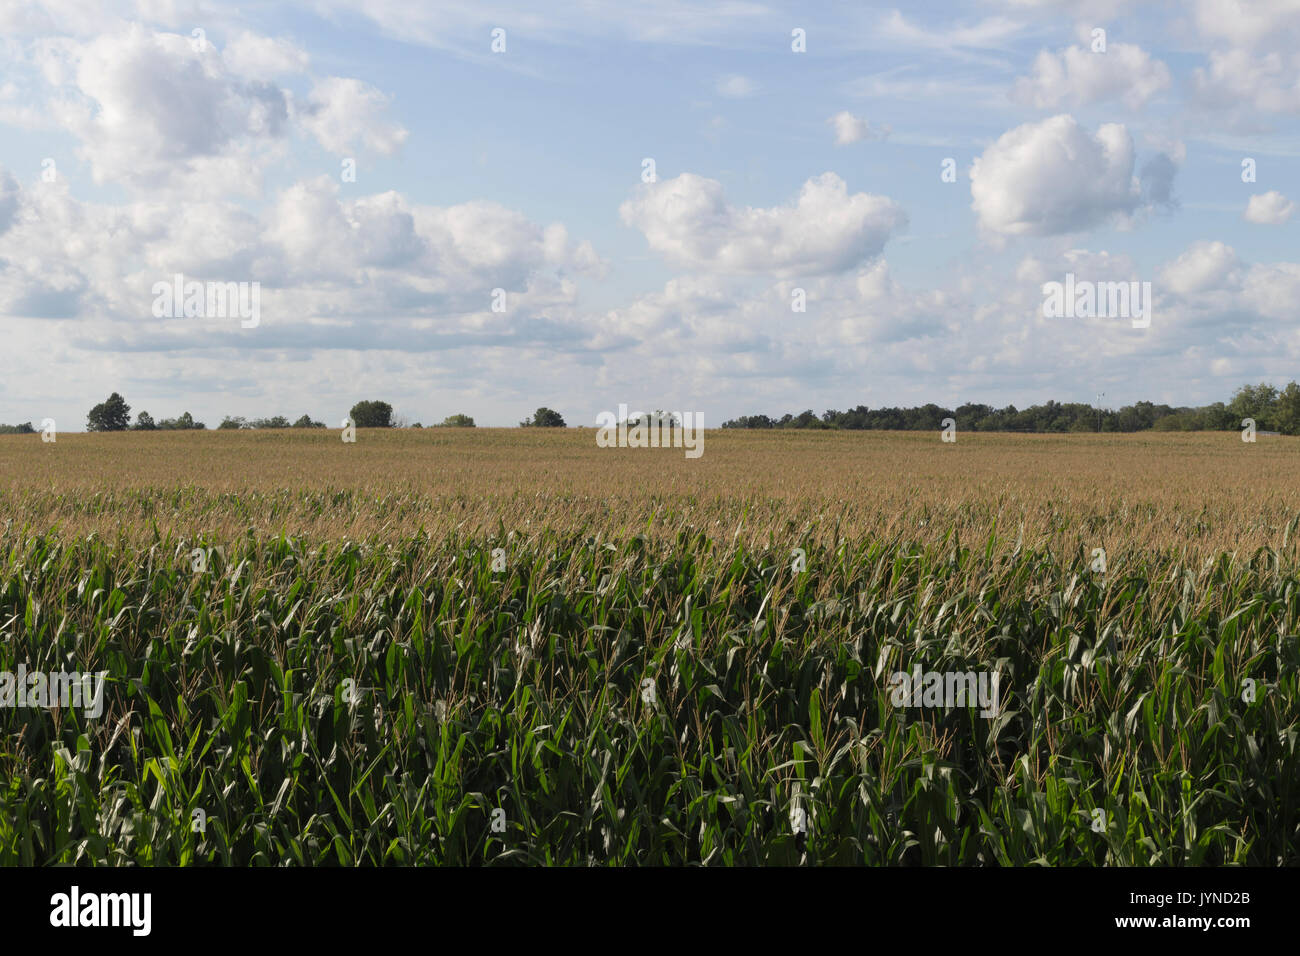 Hermoso día con abultadas nubes blancas sobre un campo de maíz. Foto de stock